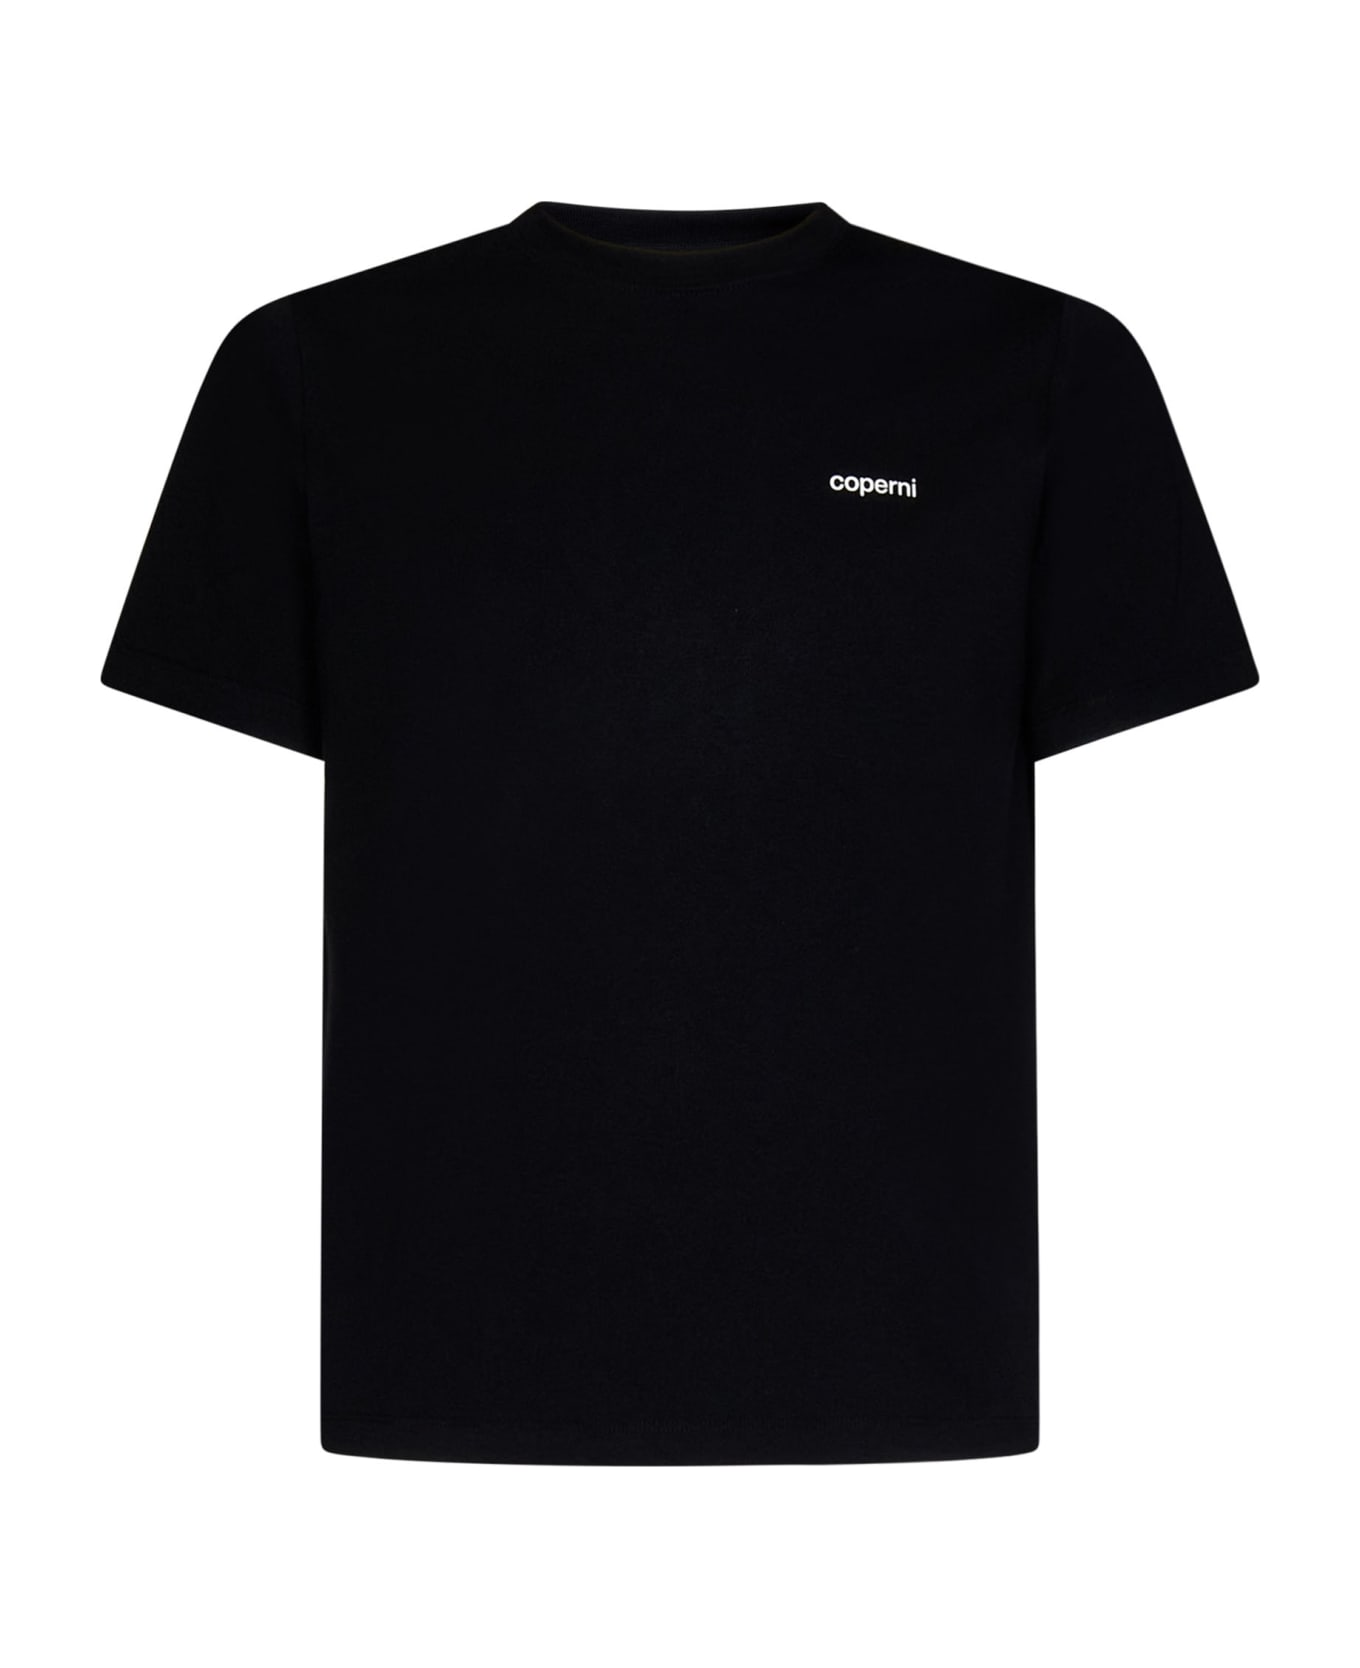 Coperni T-shirt - Black シャツ